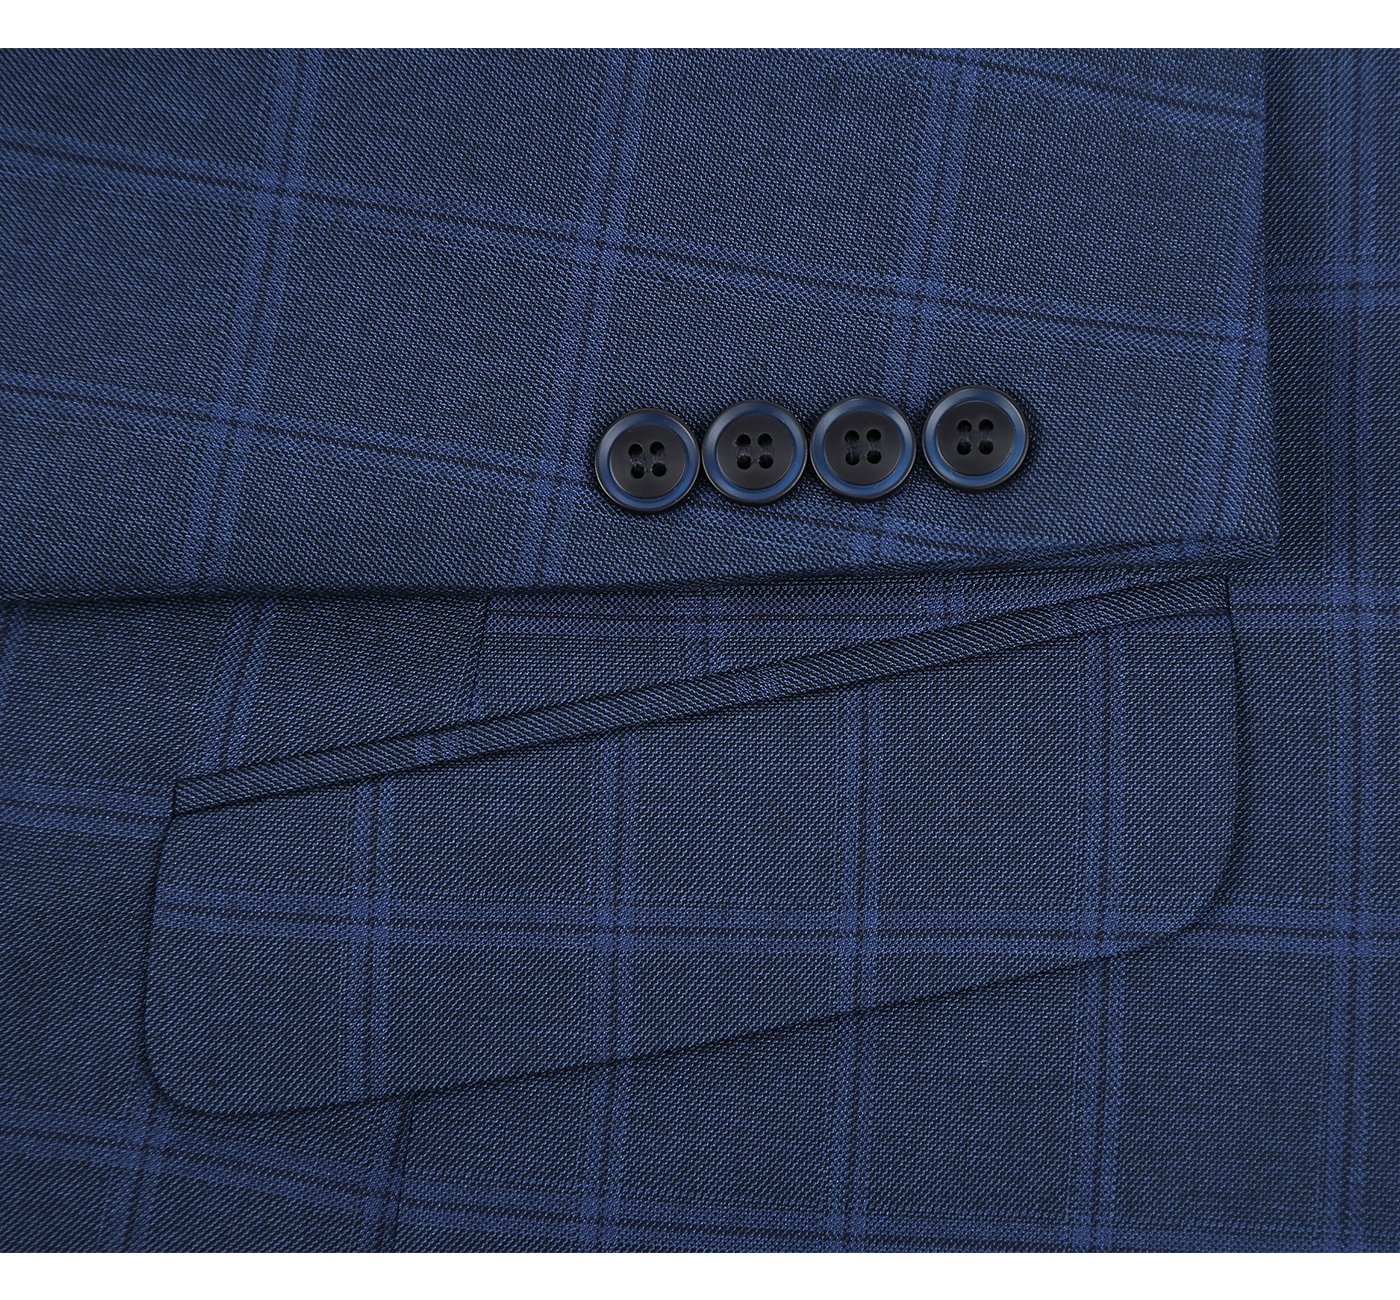 292-6 Men's Slim Fit 2-Piece Single Breasted Blue Windowpane Suit